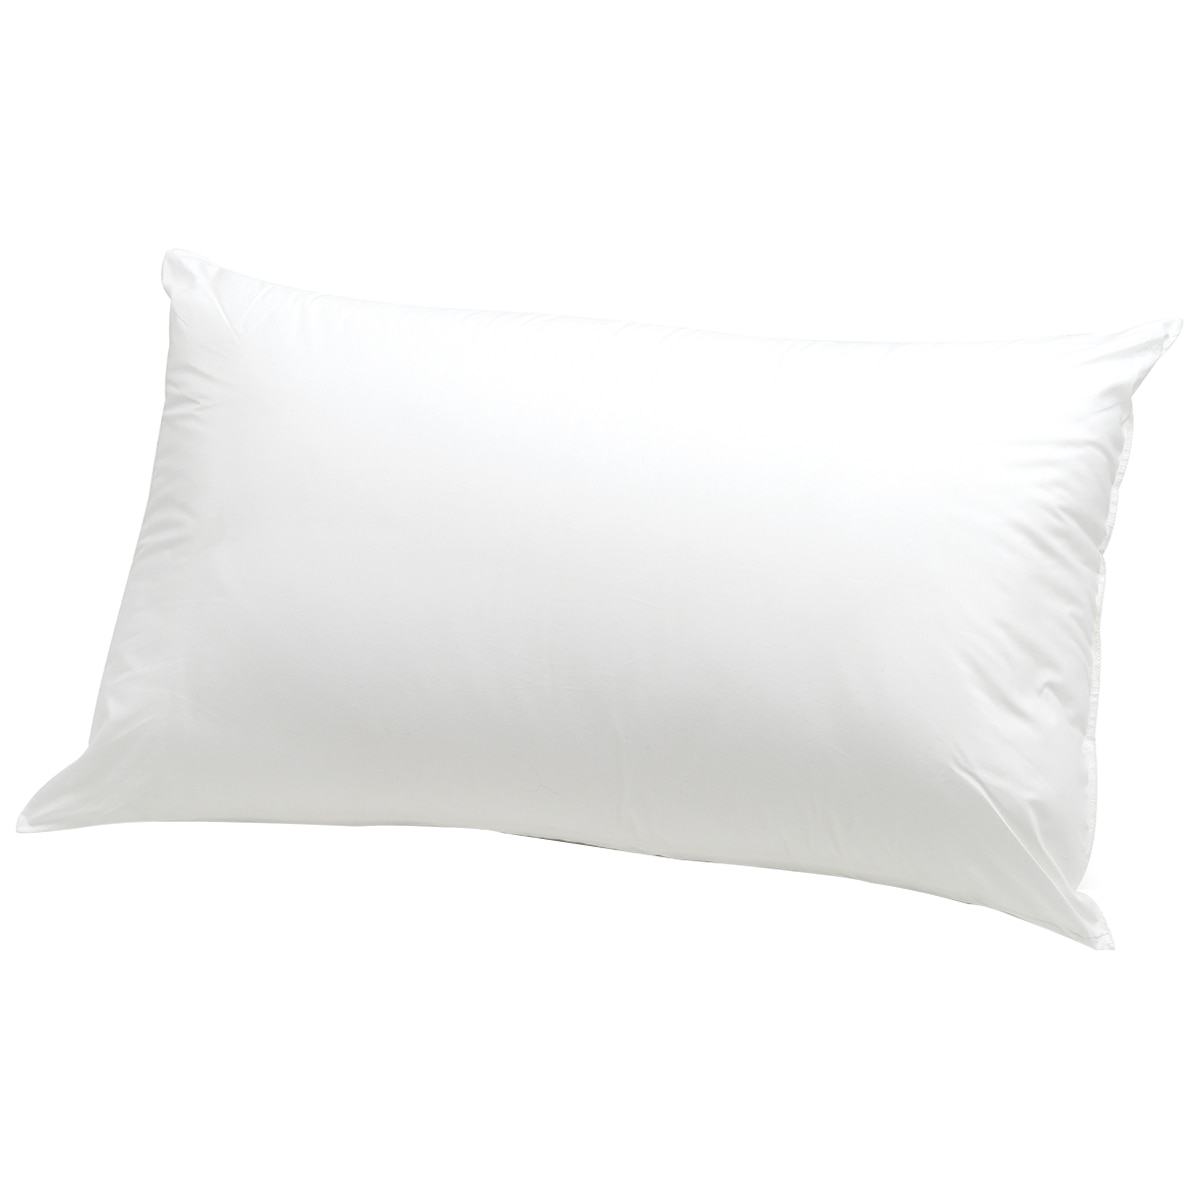 Jason Anti Allergy Pillow - Medium